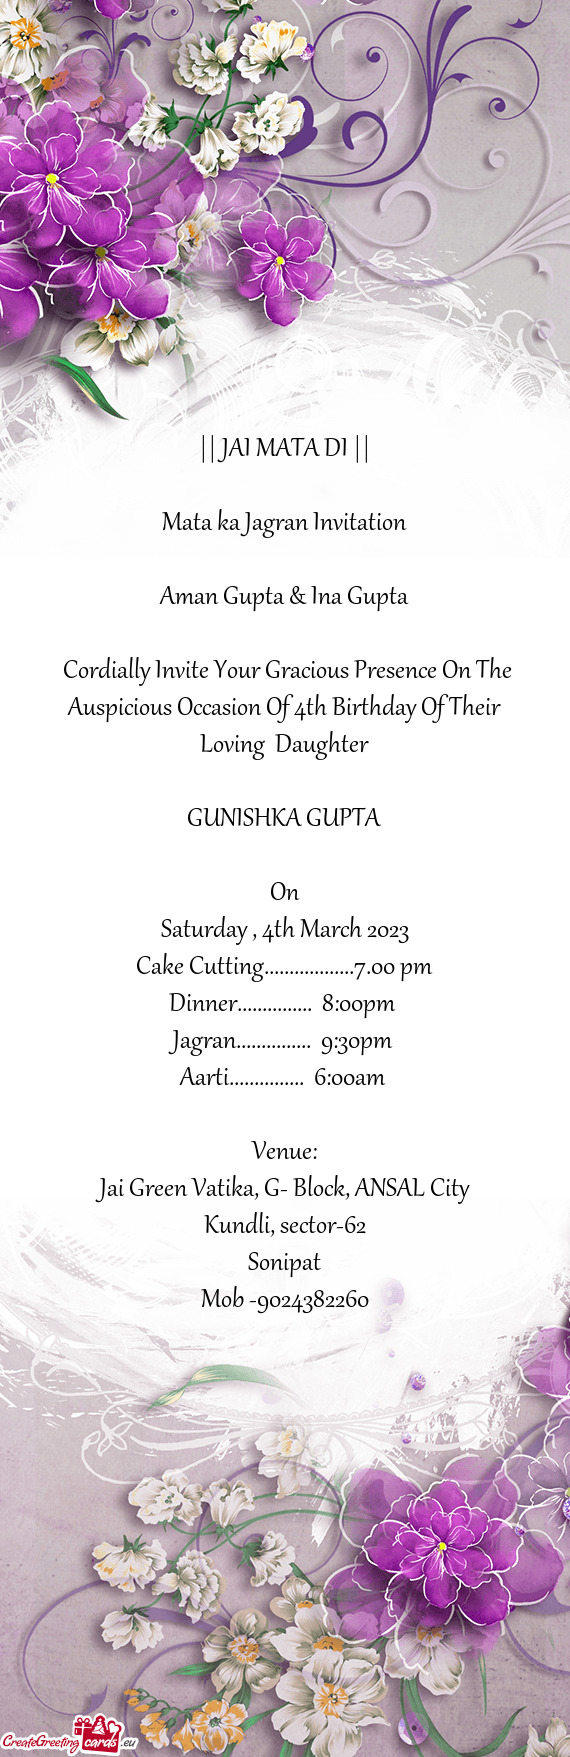 Aman Gupta & Ina Gupta